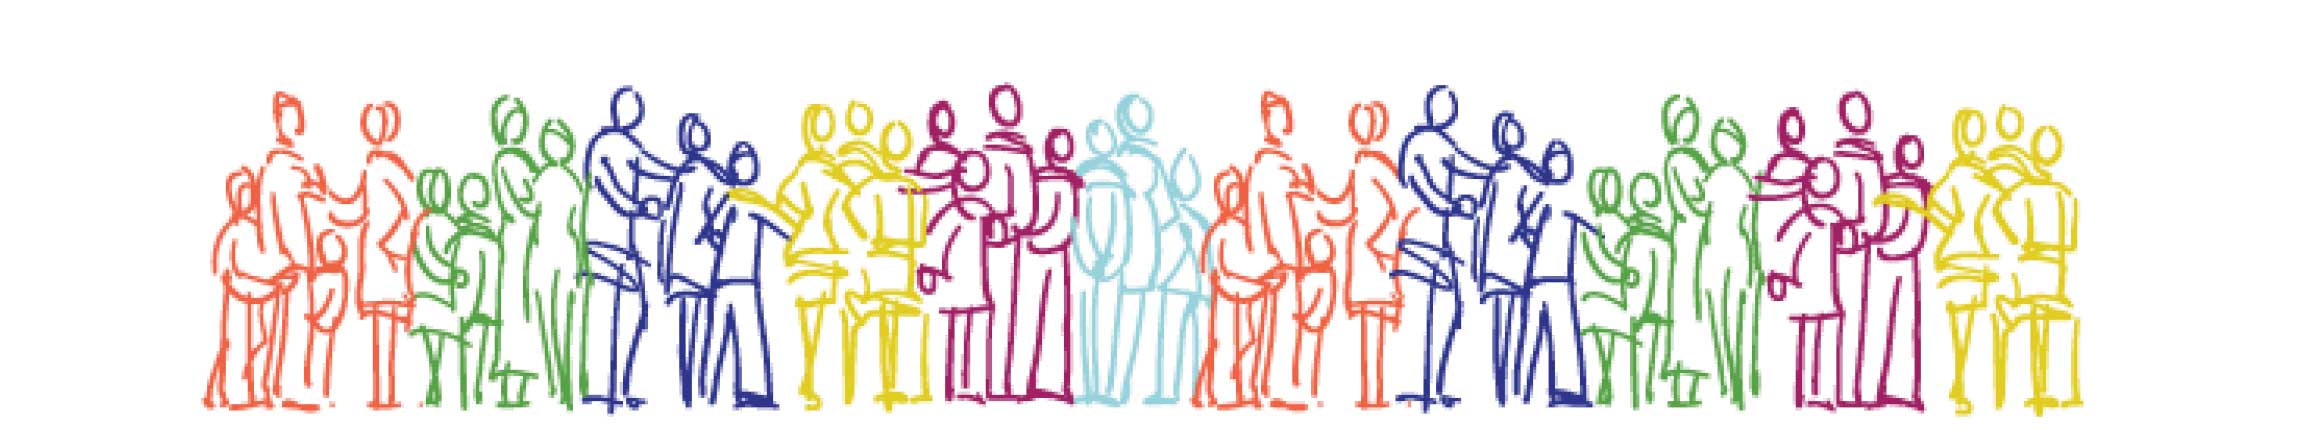 Illustration of people standing together